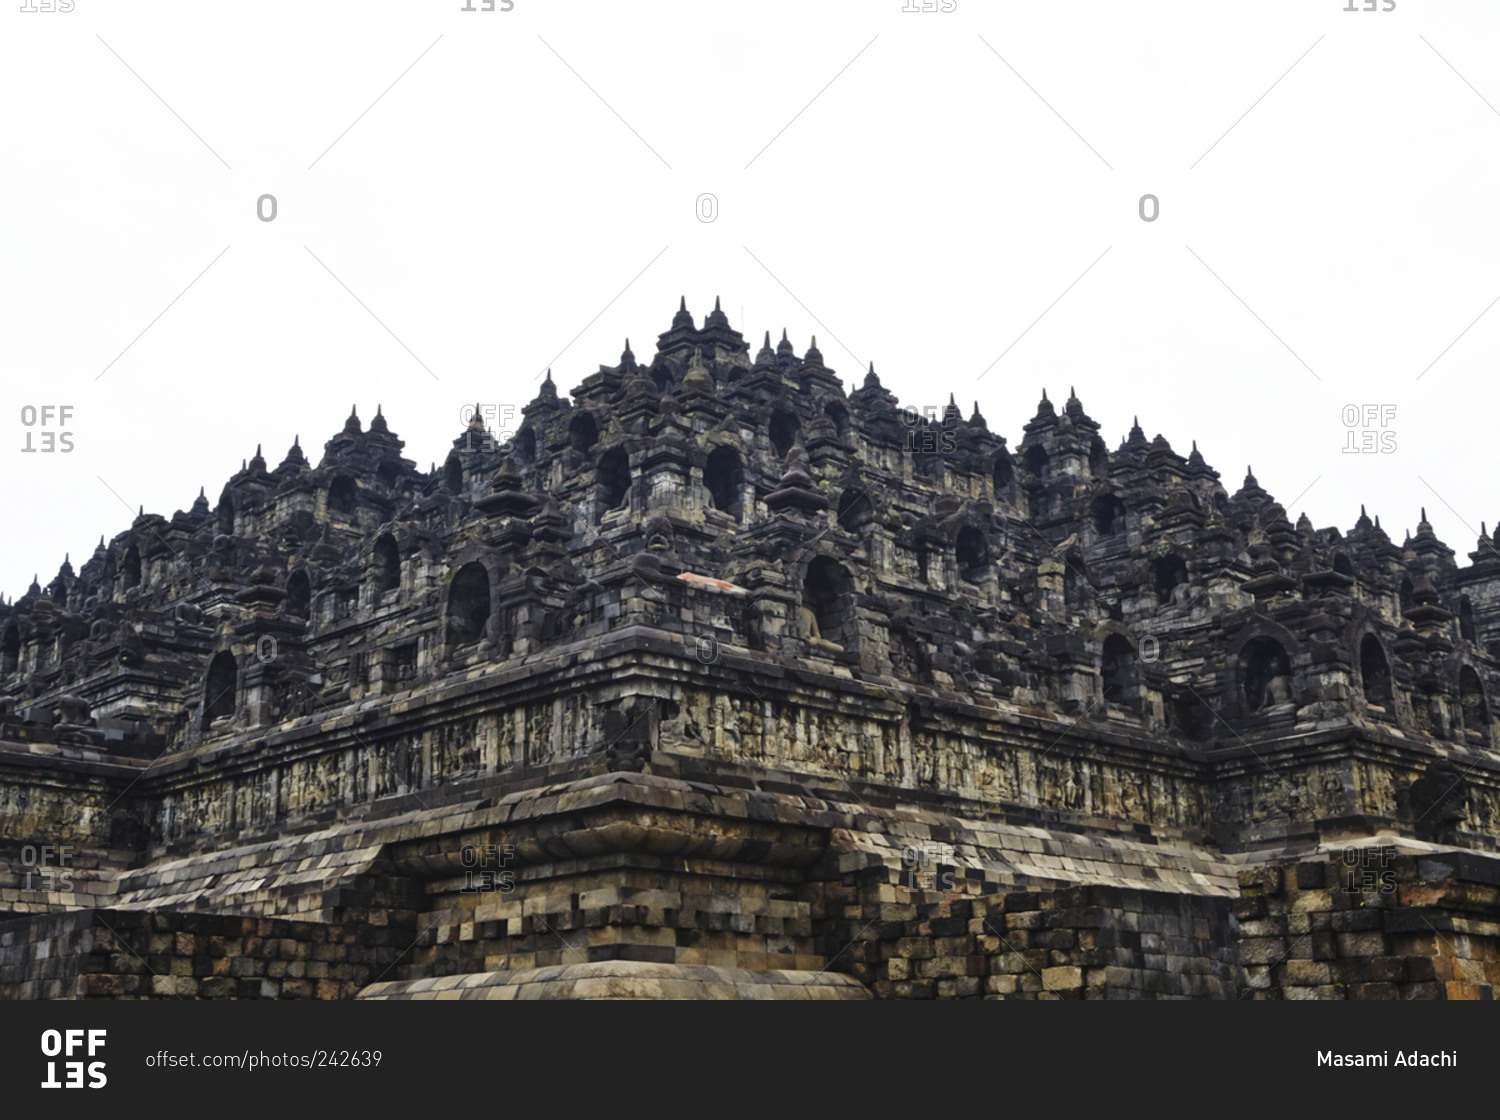 Architecture of Borobudur in Magelang, Central Java, Indonesia